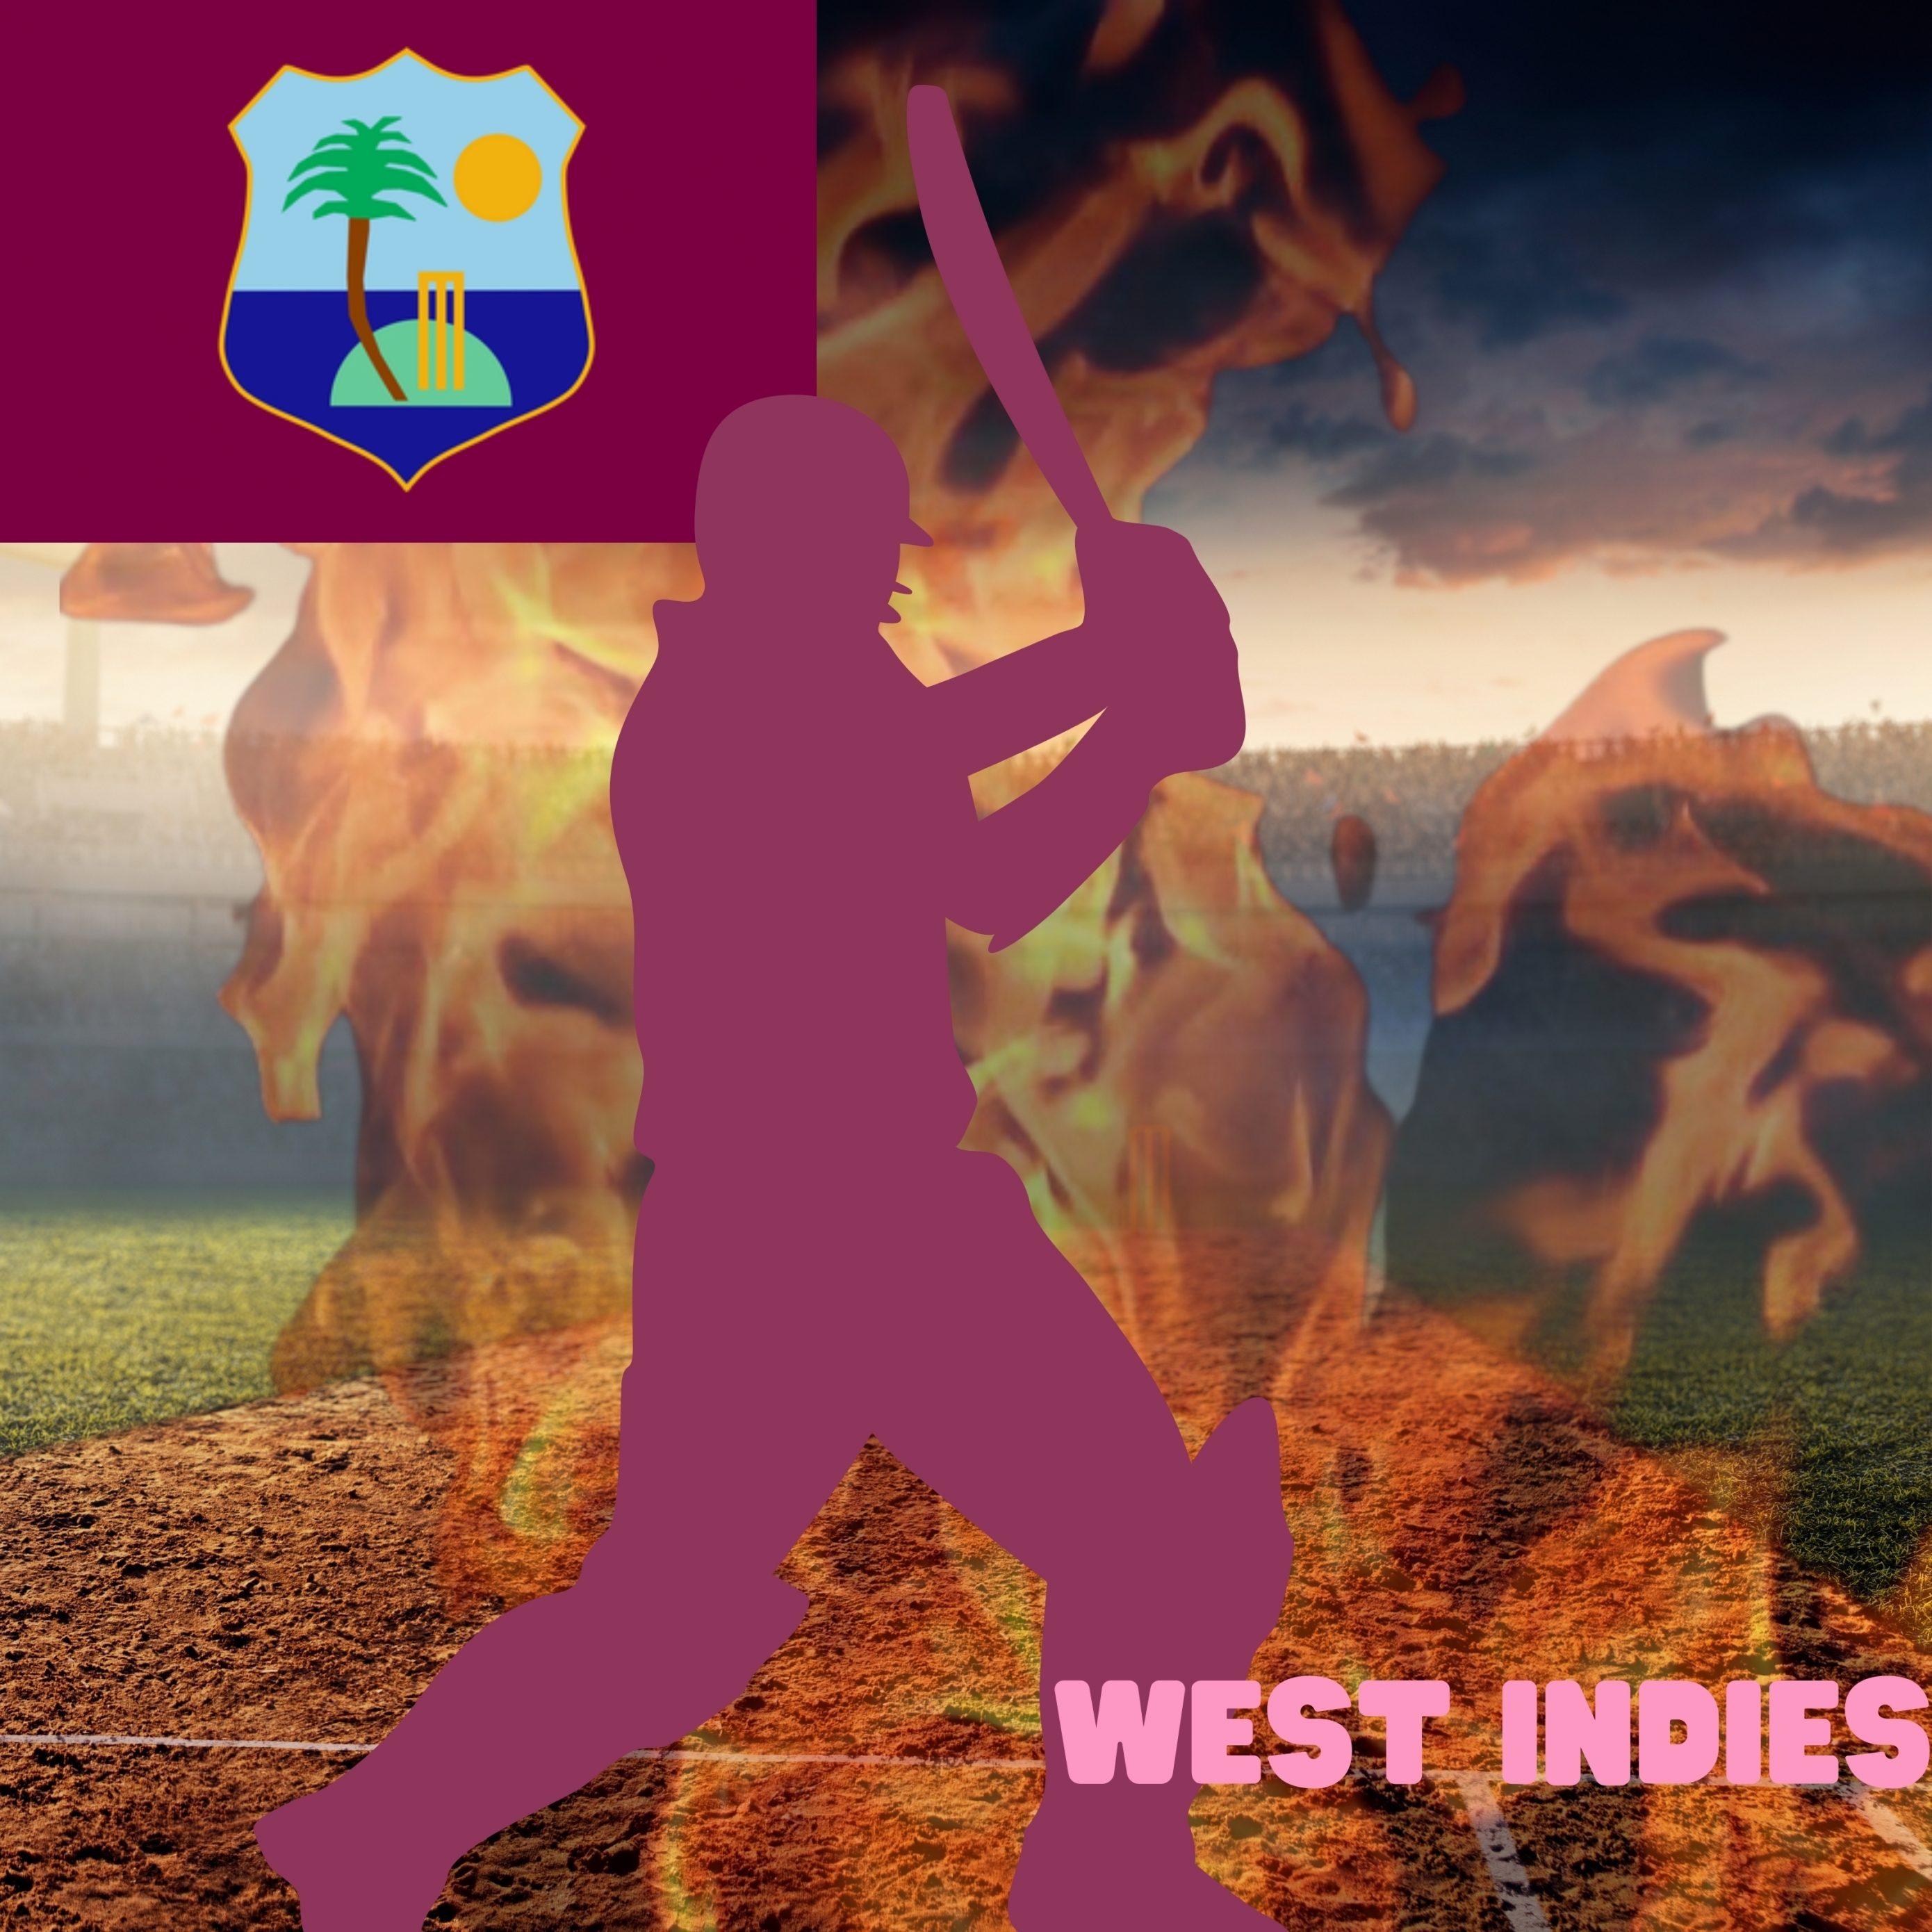 2780x2780 Parallax wallpaper 4k West Indies Cricket Stadium iPad Wallpaper 2780x2780 pixels resolution